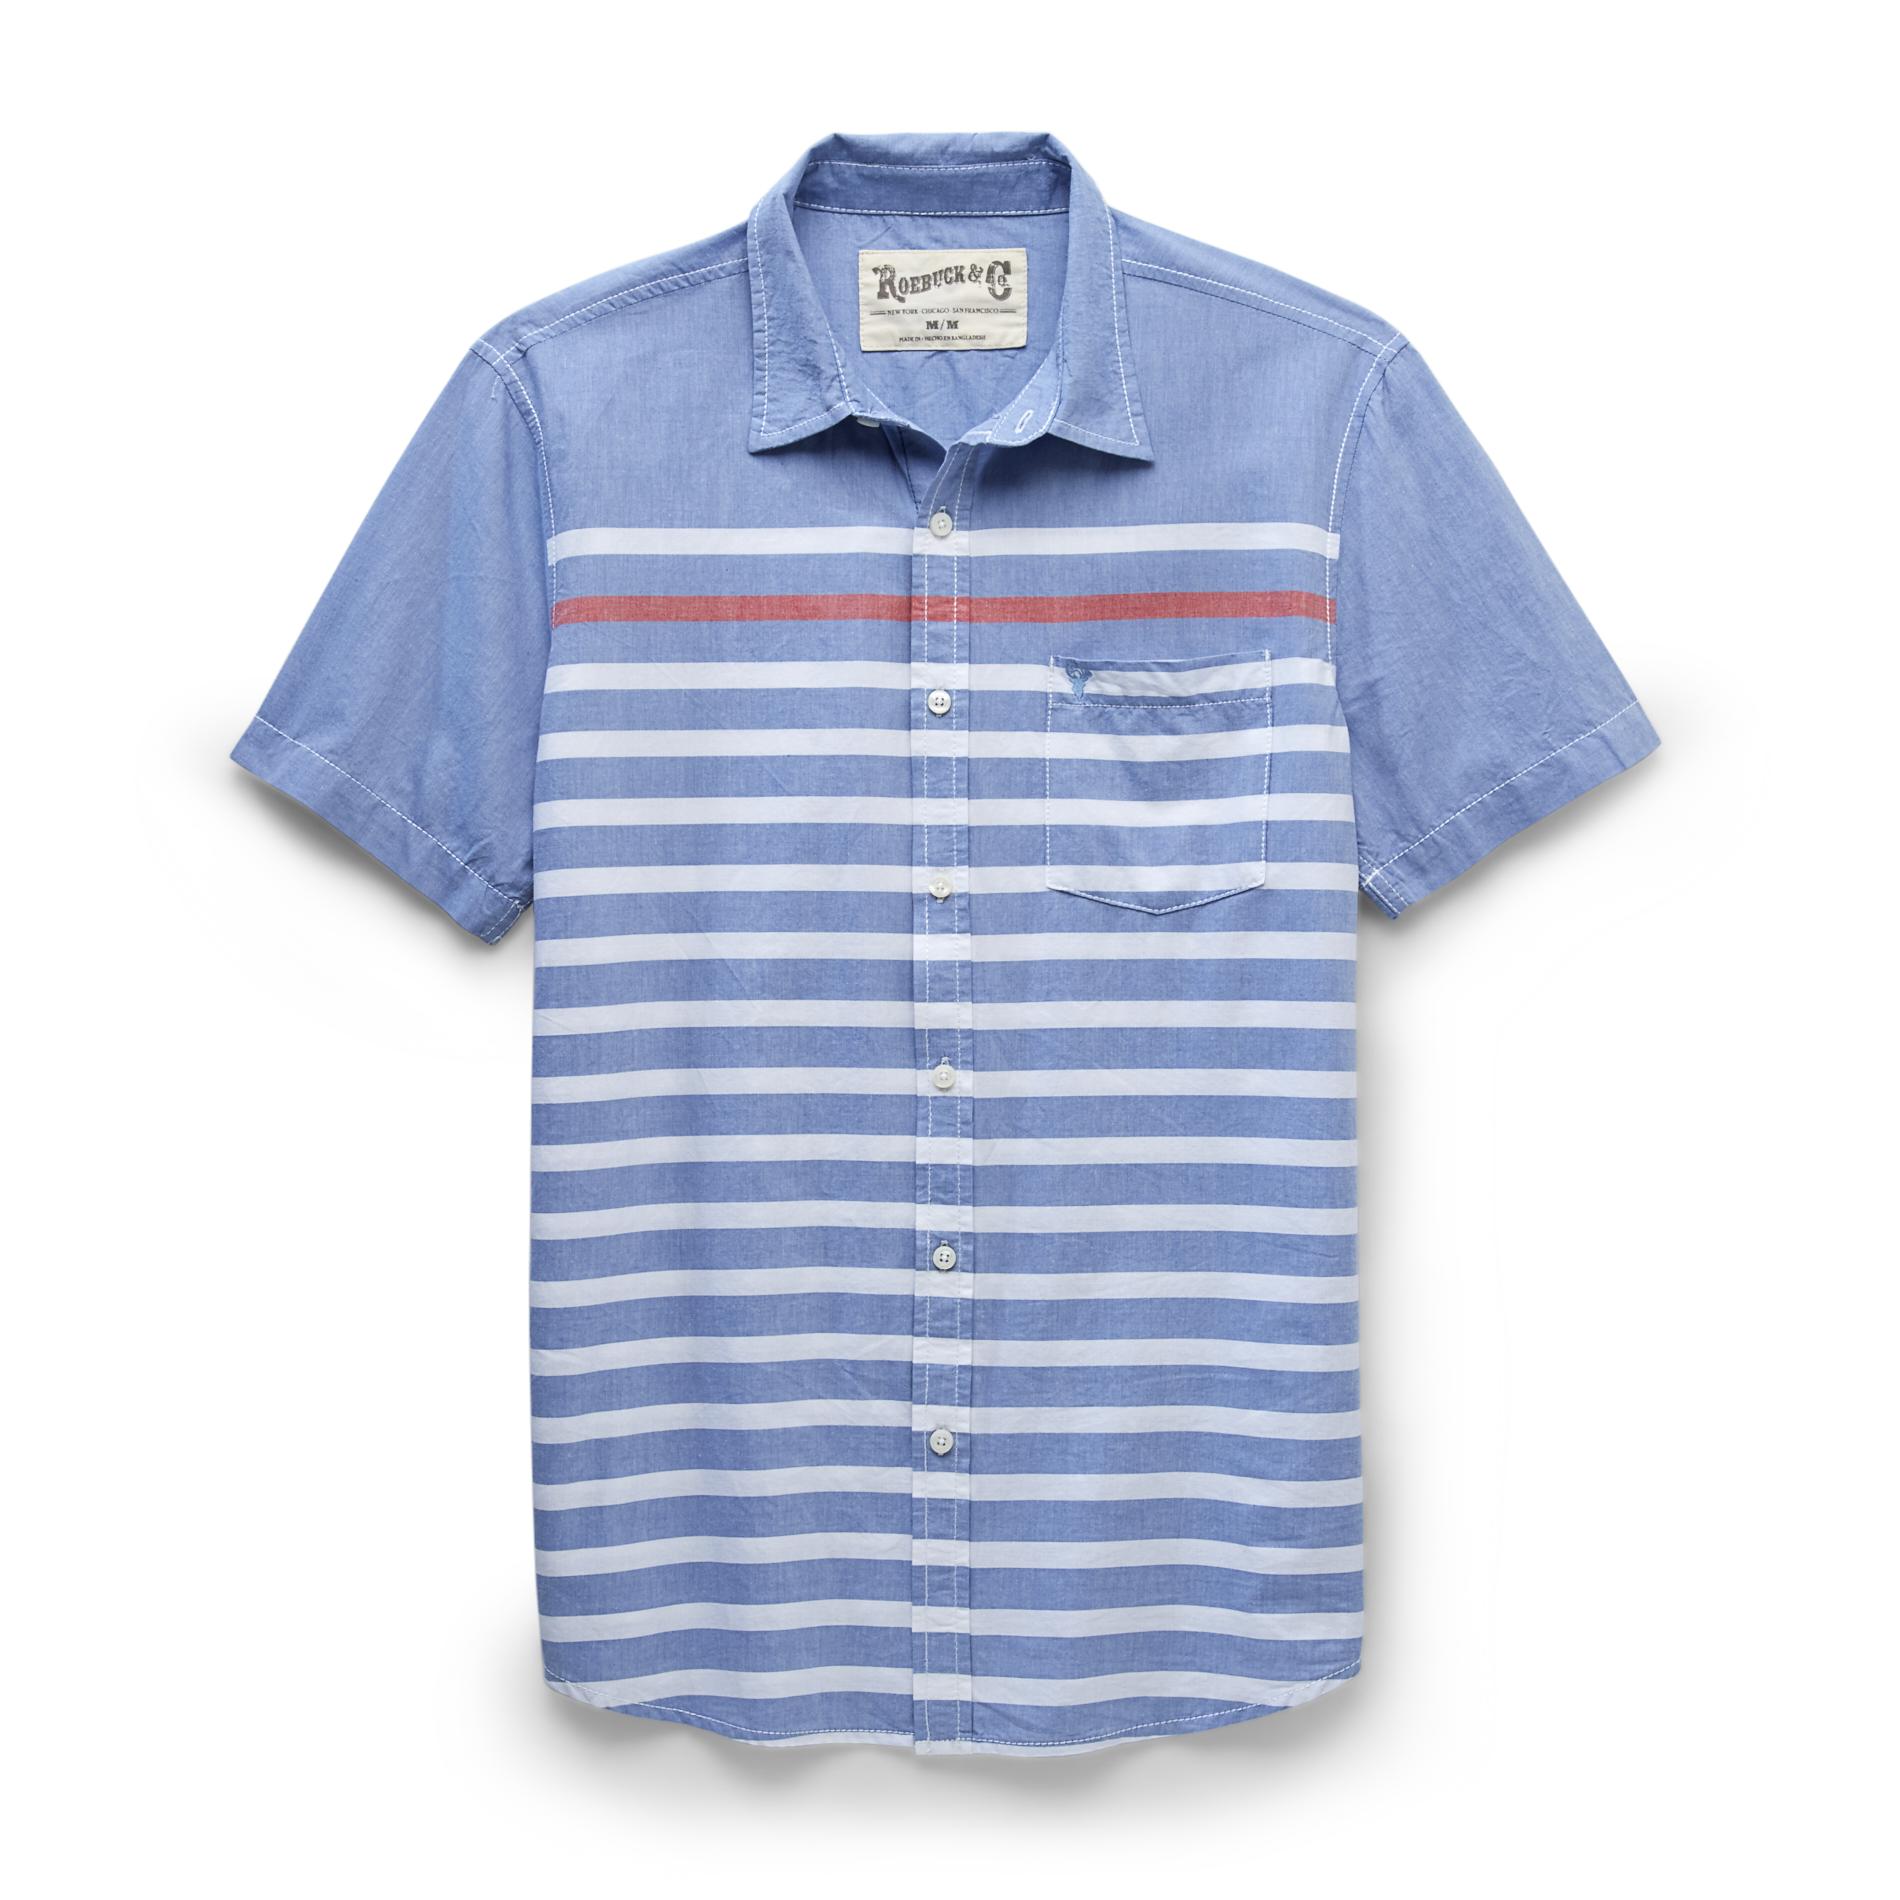 Roebuck & Co. Young Men's Short-Sleeve Shirt - Striped